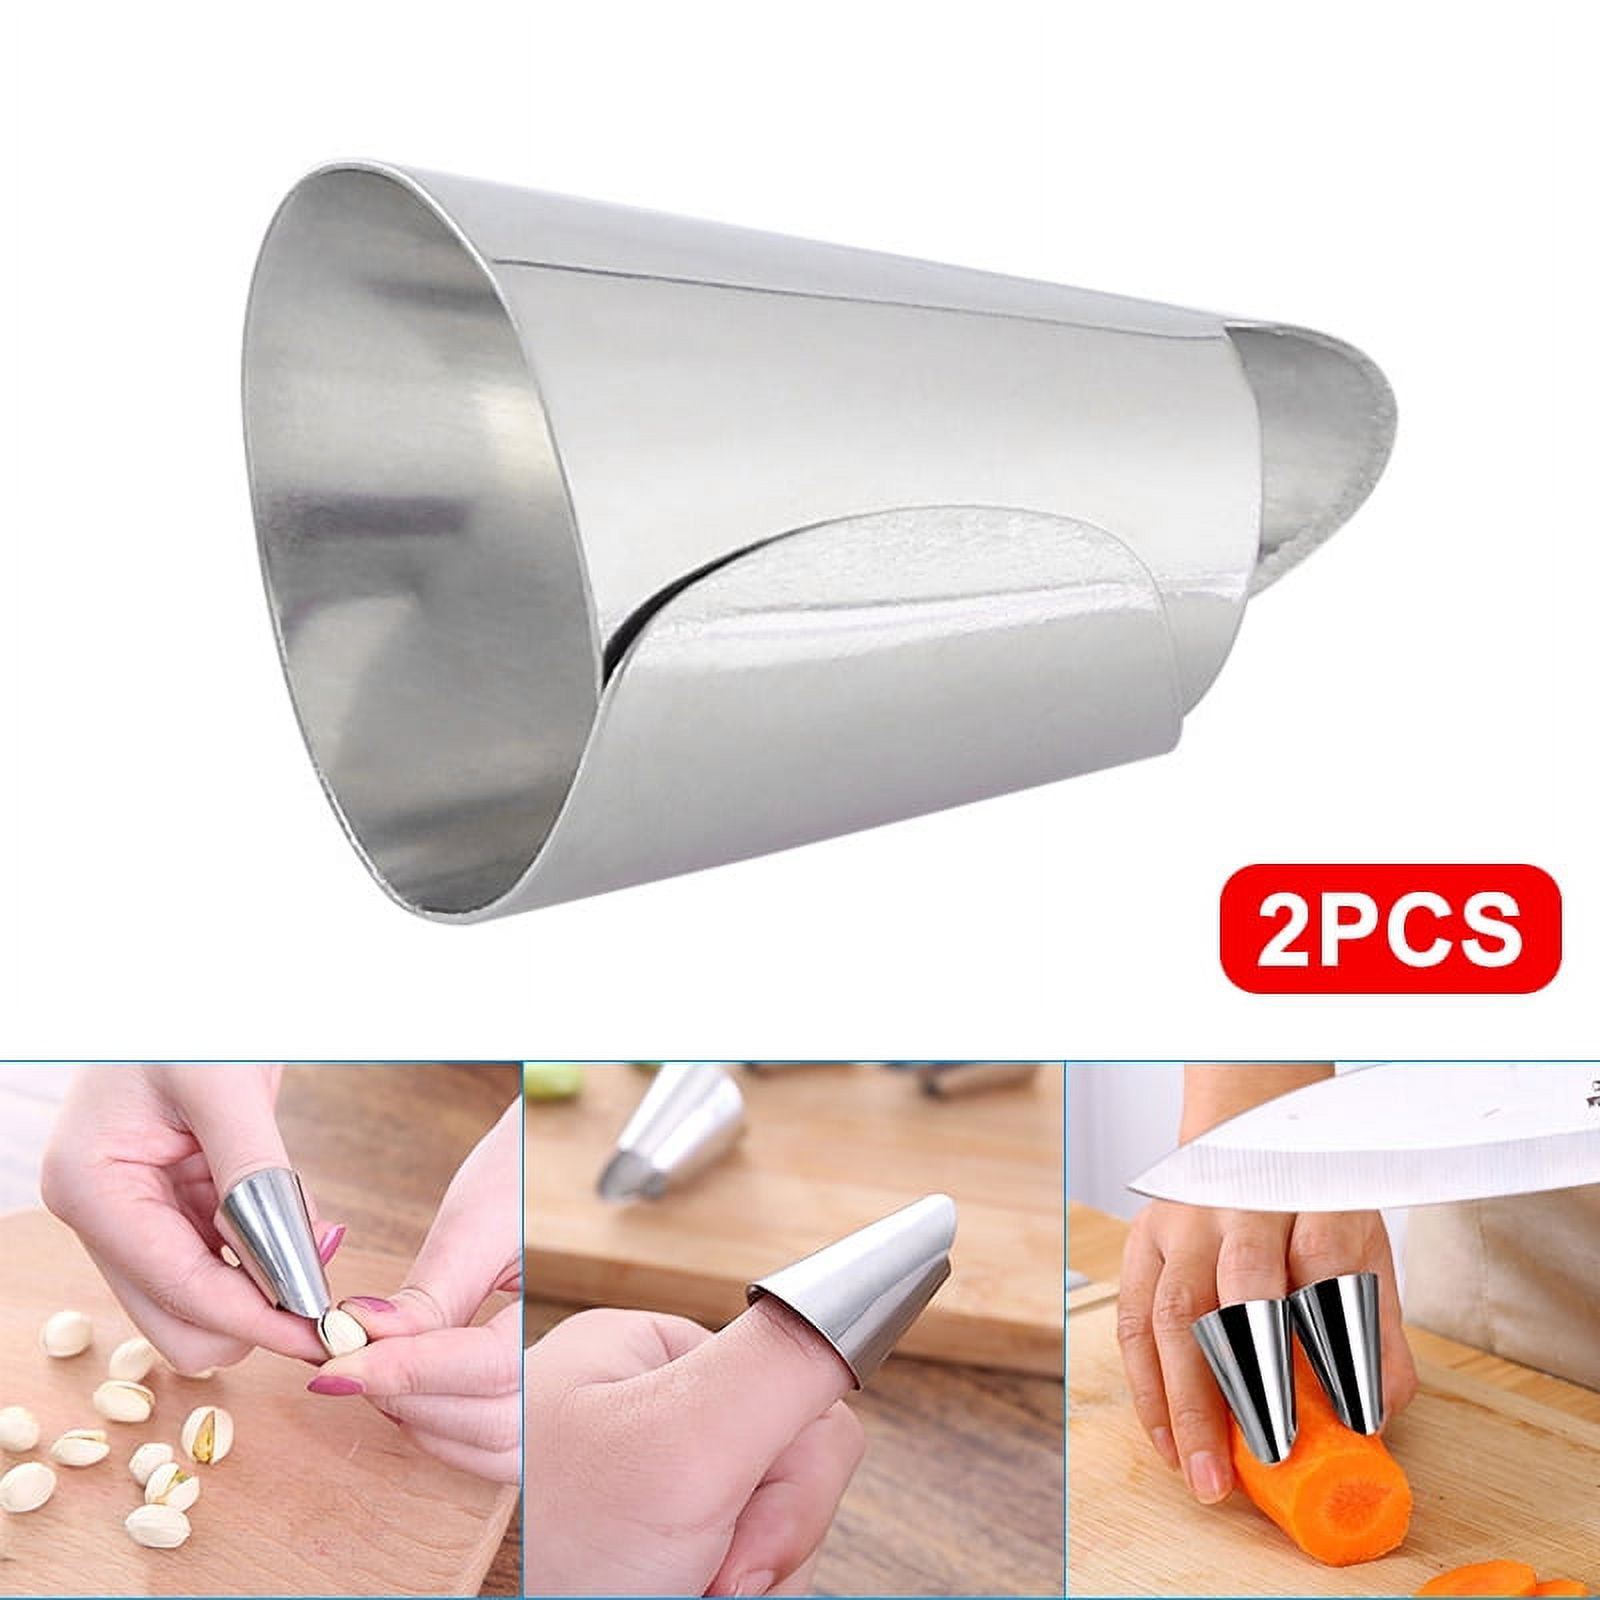 2 Pcs Stainless Steel Fruit Peeler Household Kitchen Tools Plastic